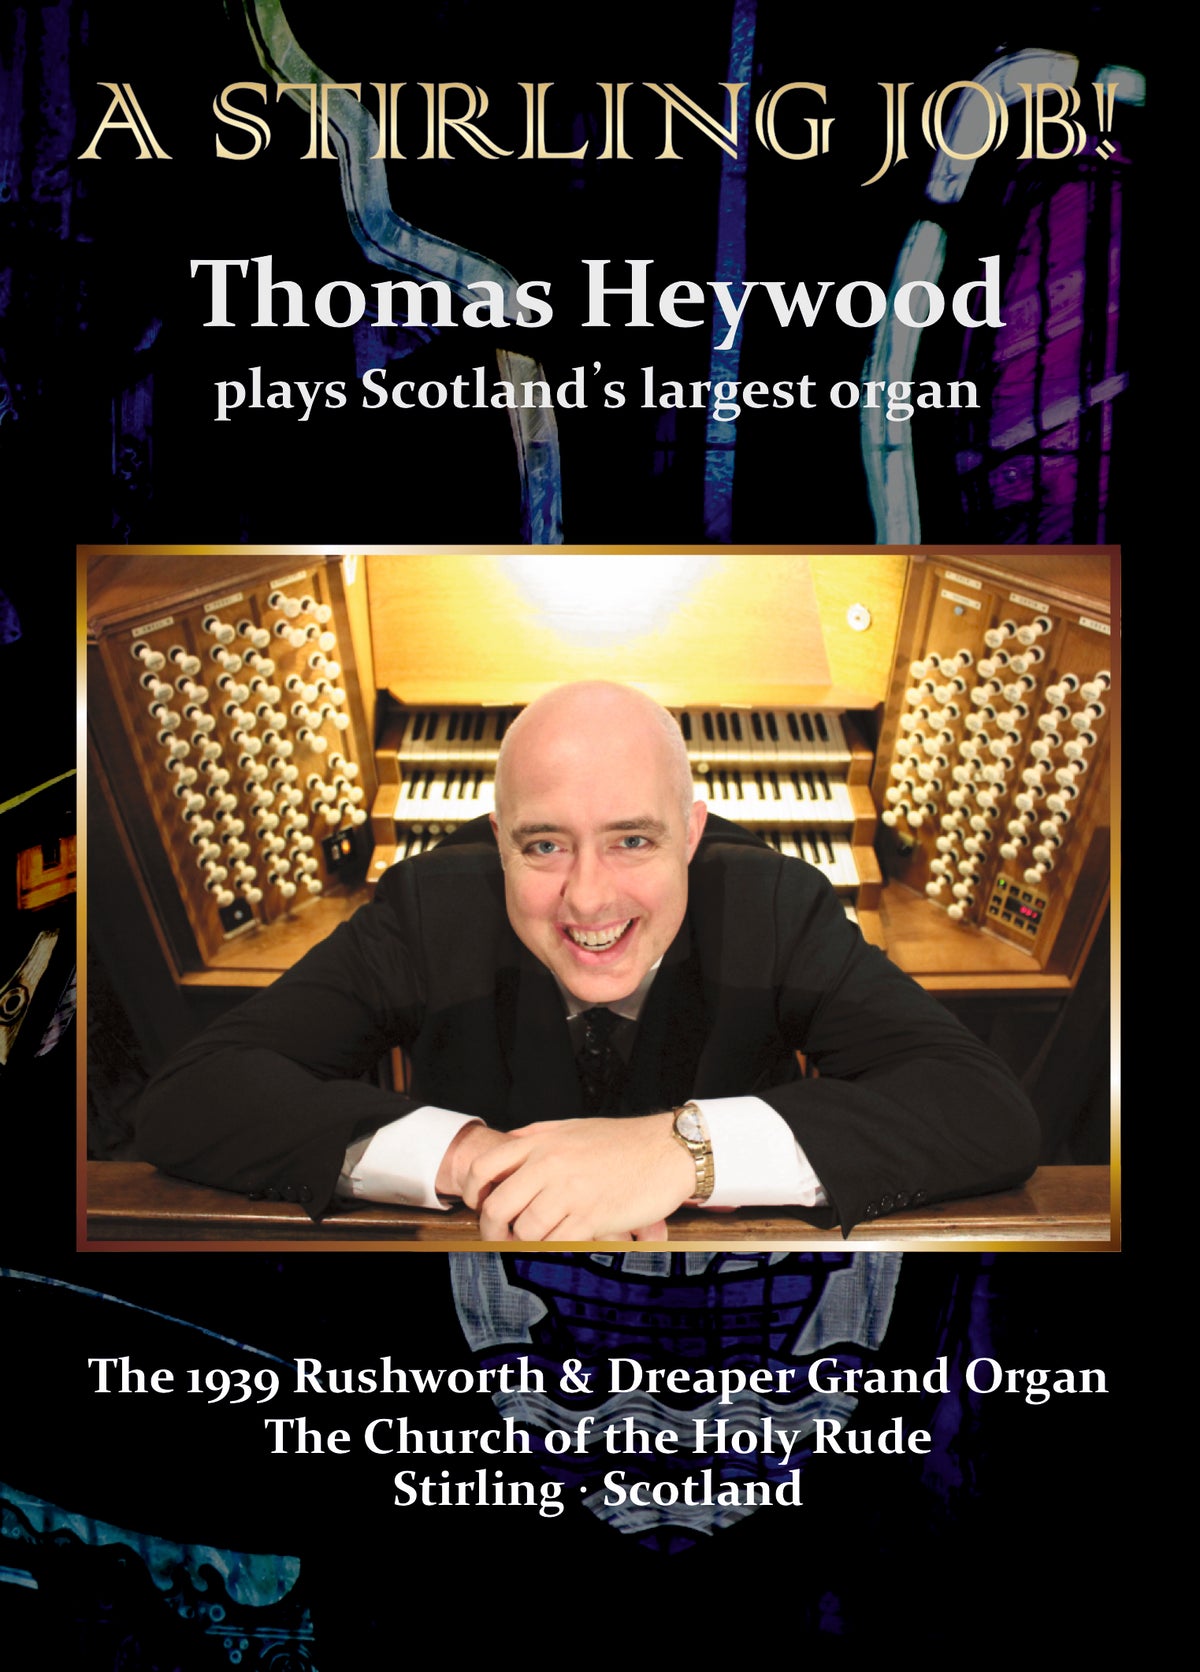 A Stirling Job! (MP4 Film) | Thomas Heywood | Concert Organ International